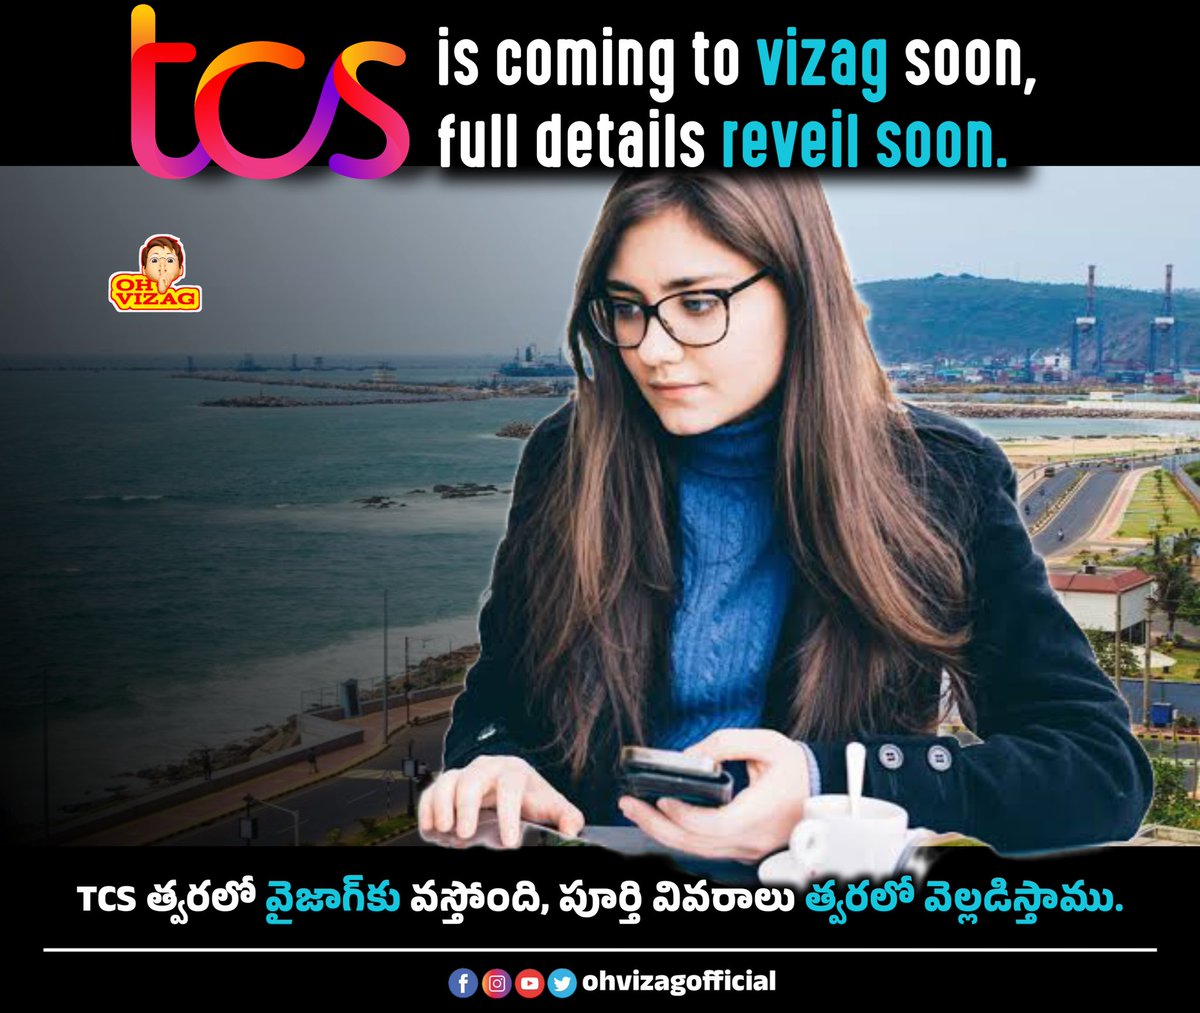 TCS in Vizag 💥

#TCS #VizagIT